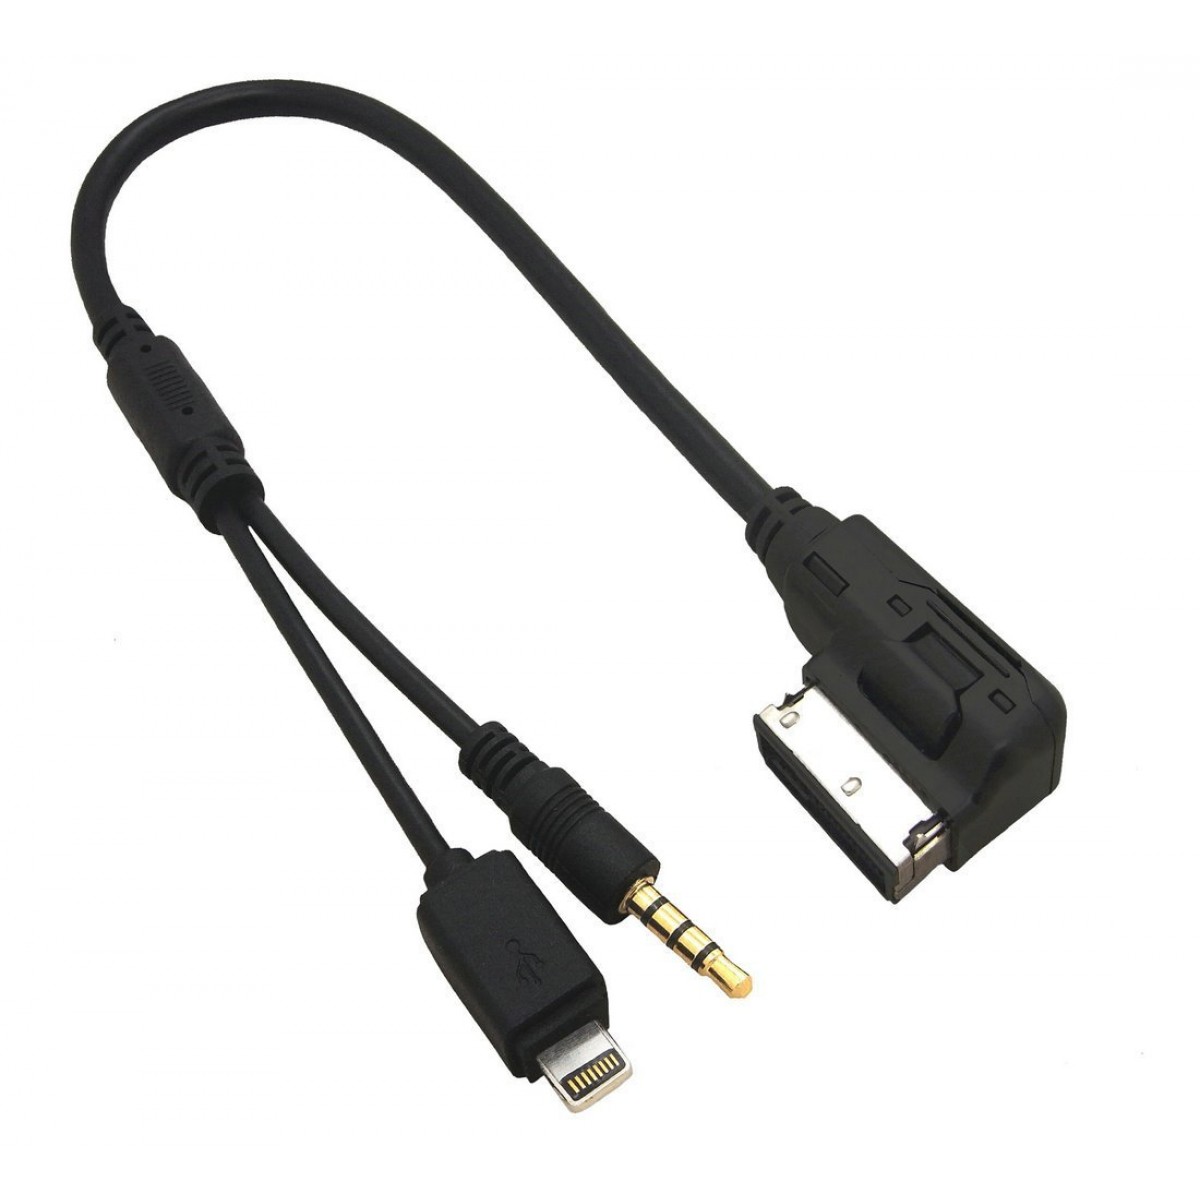 Eidoct AMI MMI 3,5 mm AUX 8 Pin Ladeadapter Kabel für iPhone 5 5S 6 6S Plus iPod iPad passend für Audi A3 A4 A5 A6 A8 Q5 Q7 